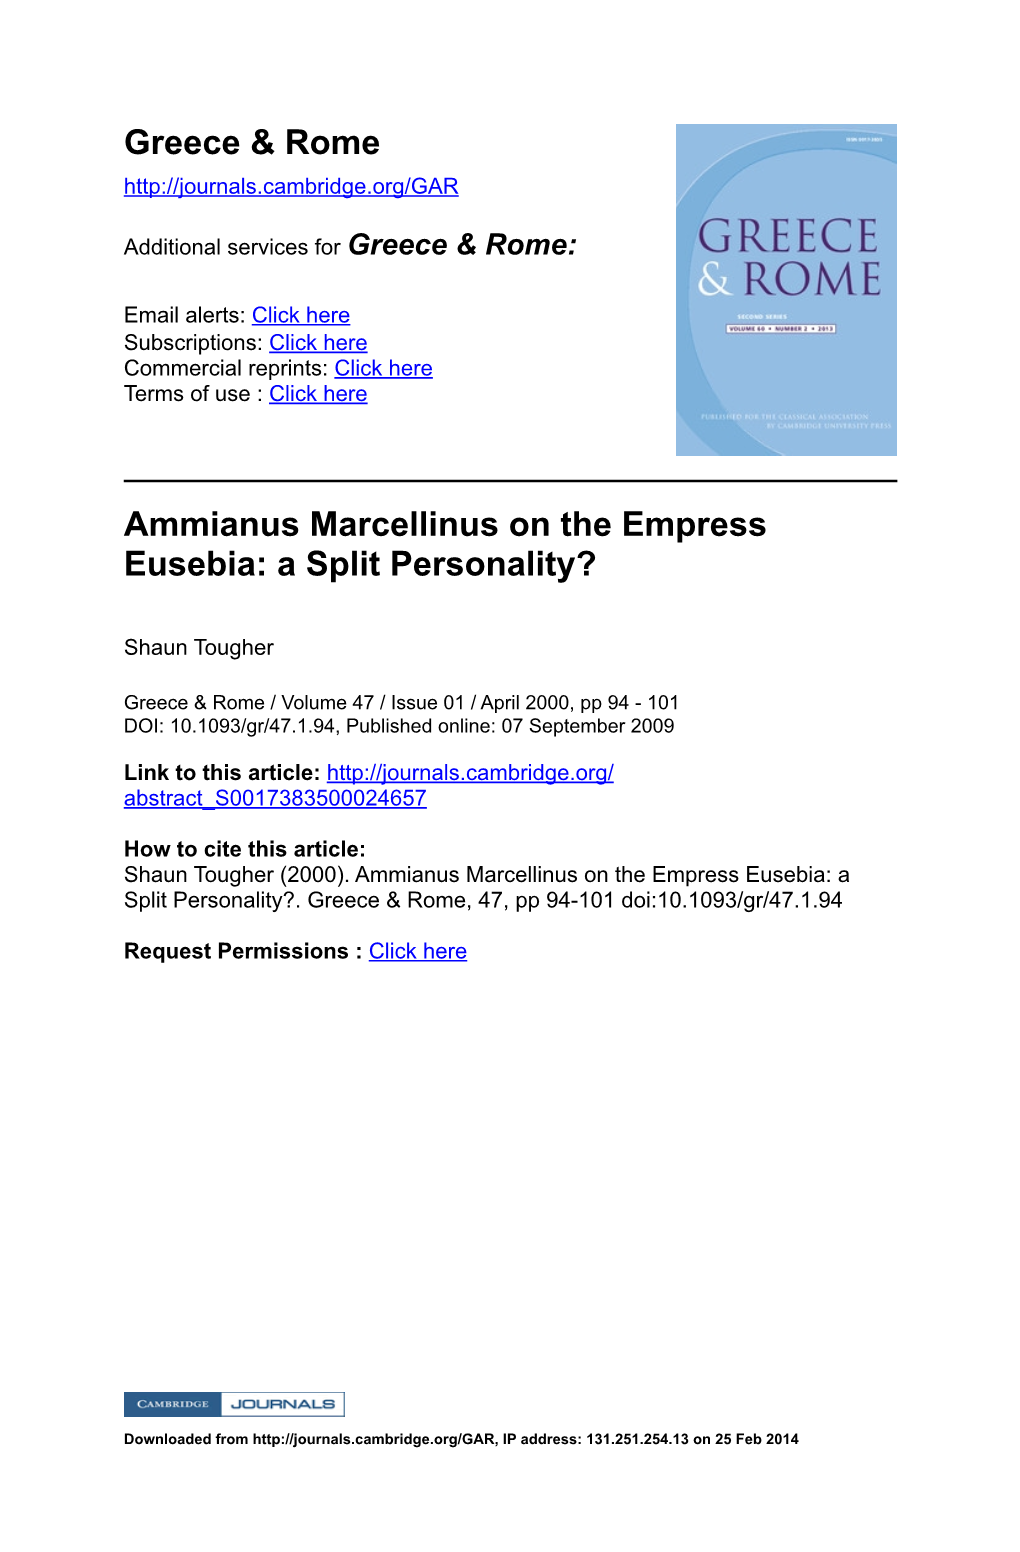 Greece & Rome Ammianus Marcellinus on the Empress Eusebia